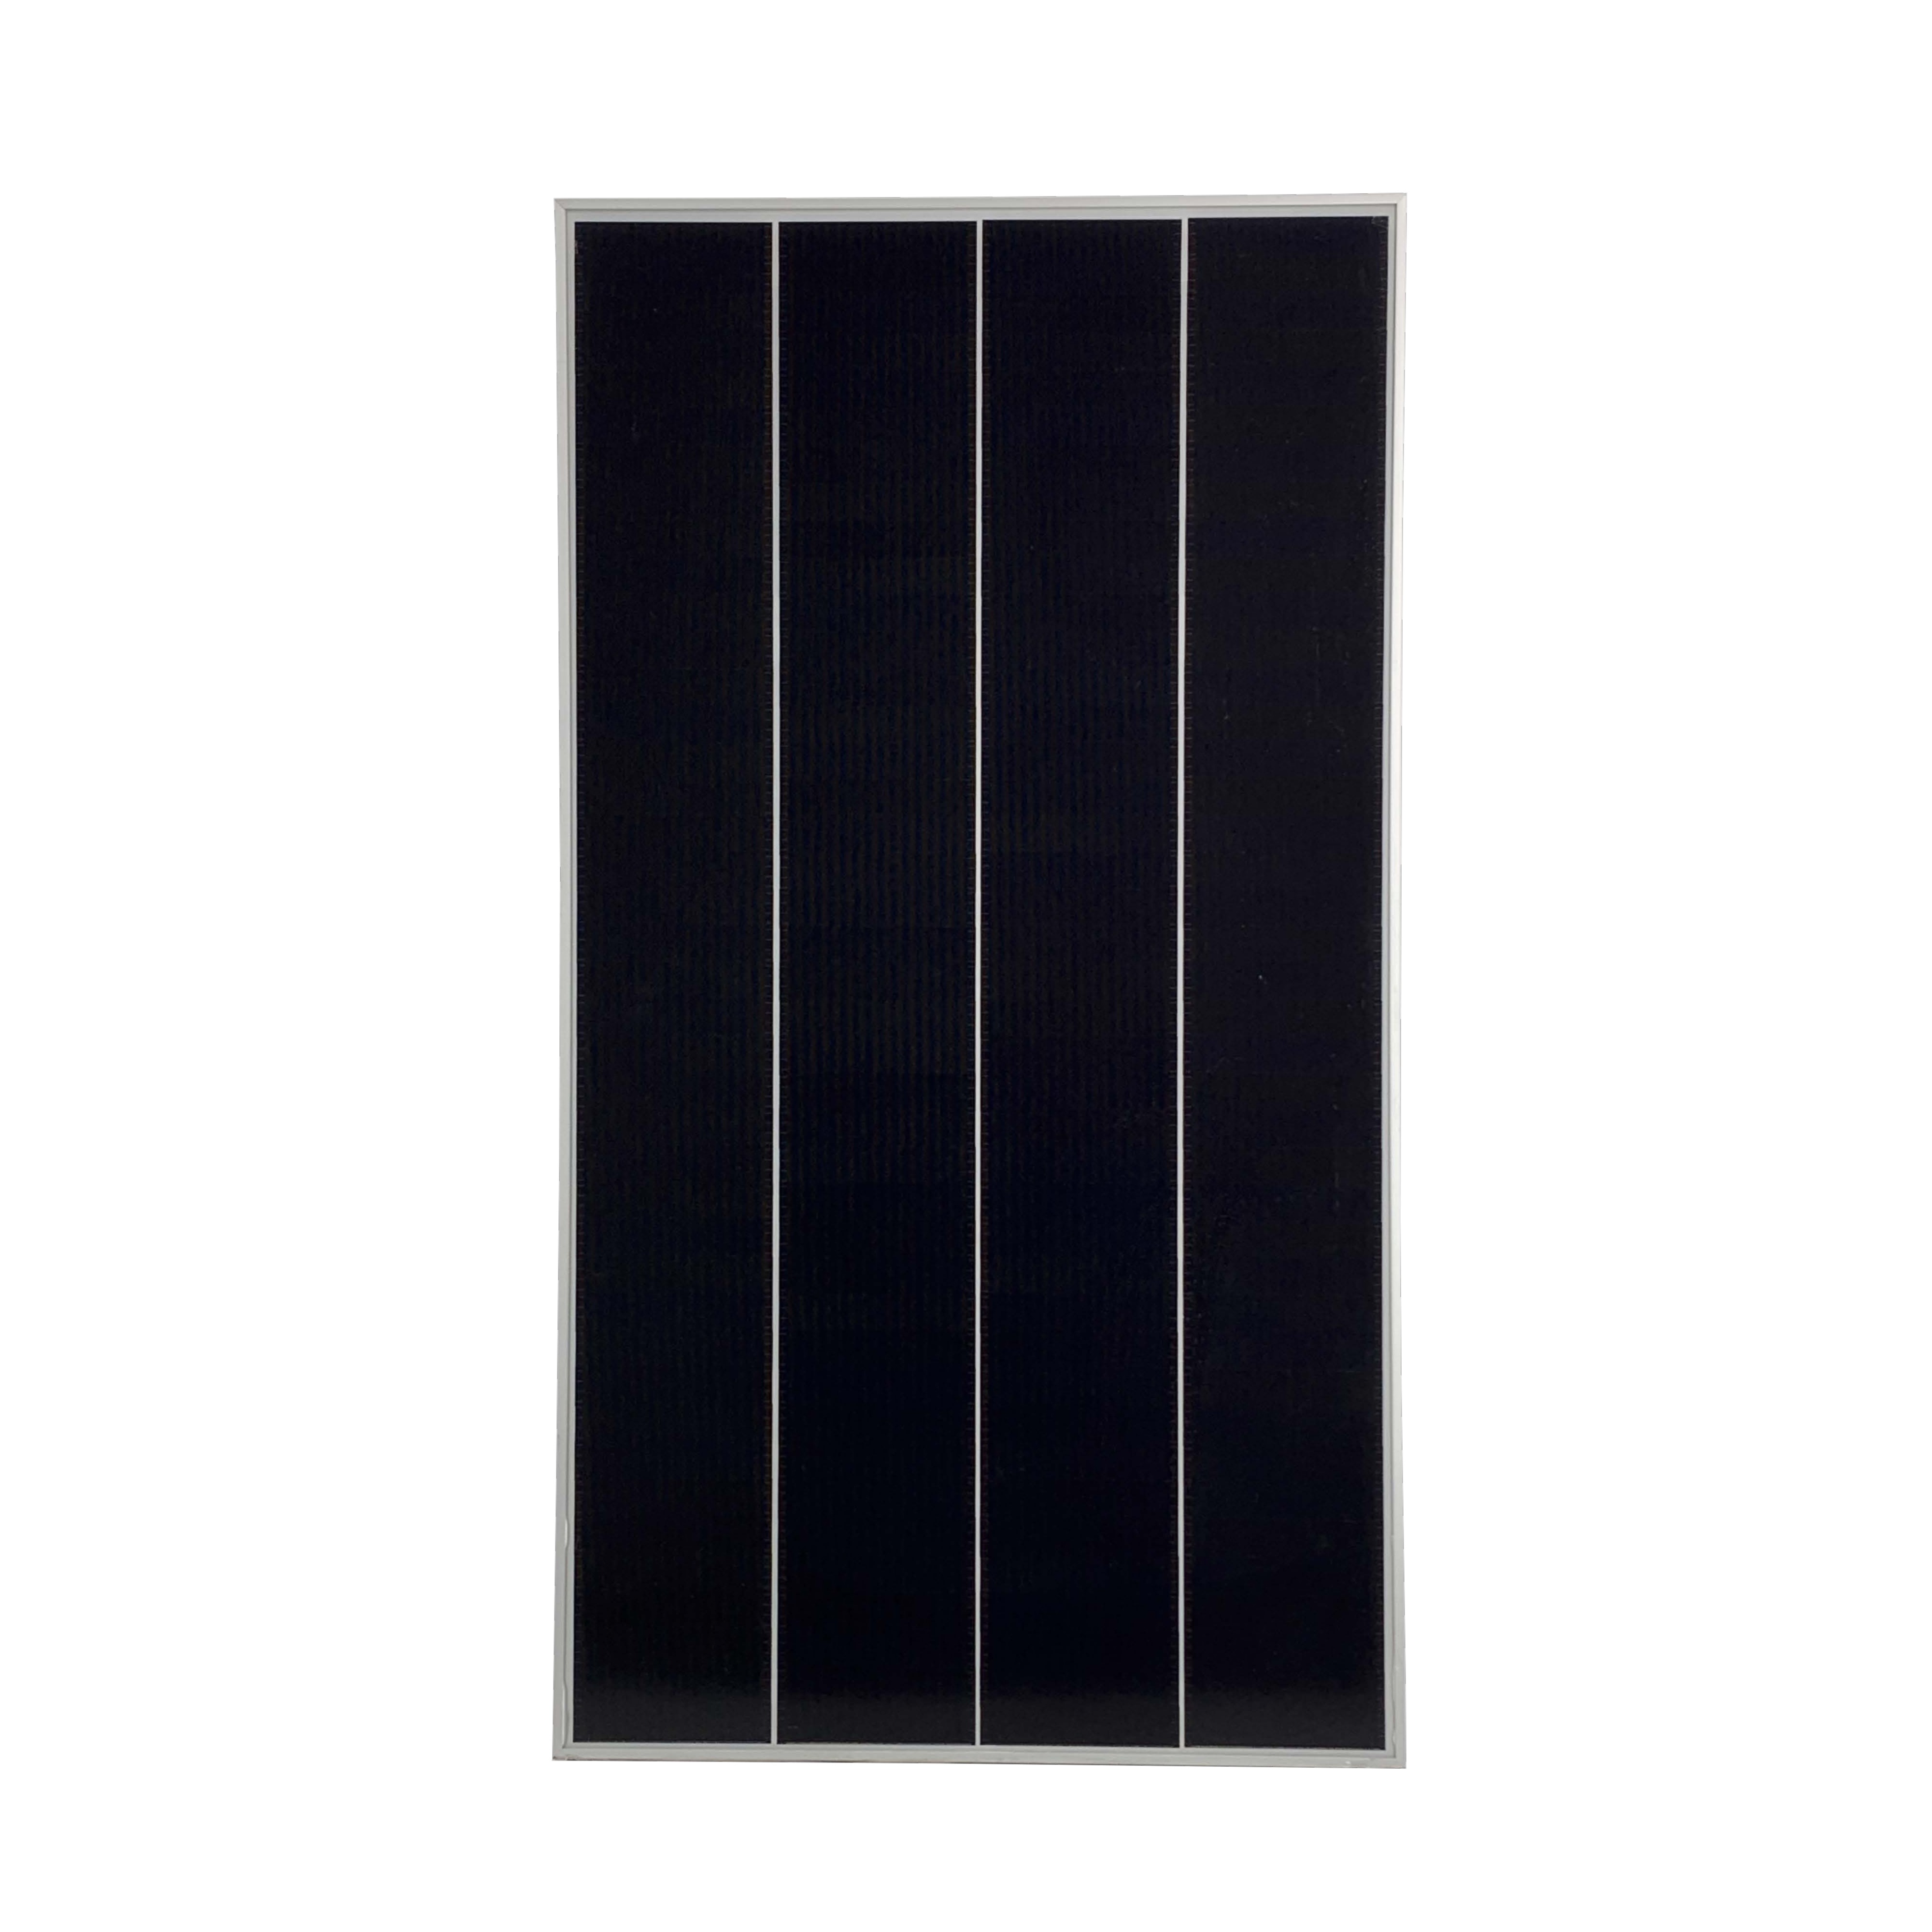 Panel Solar 200w